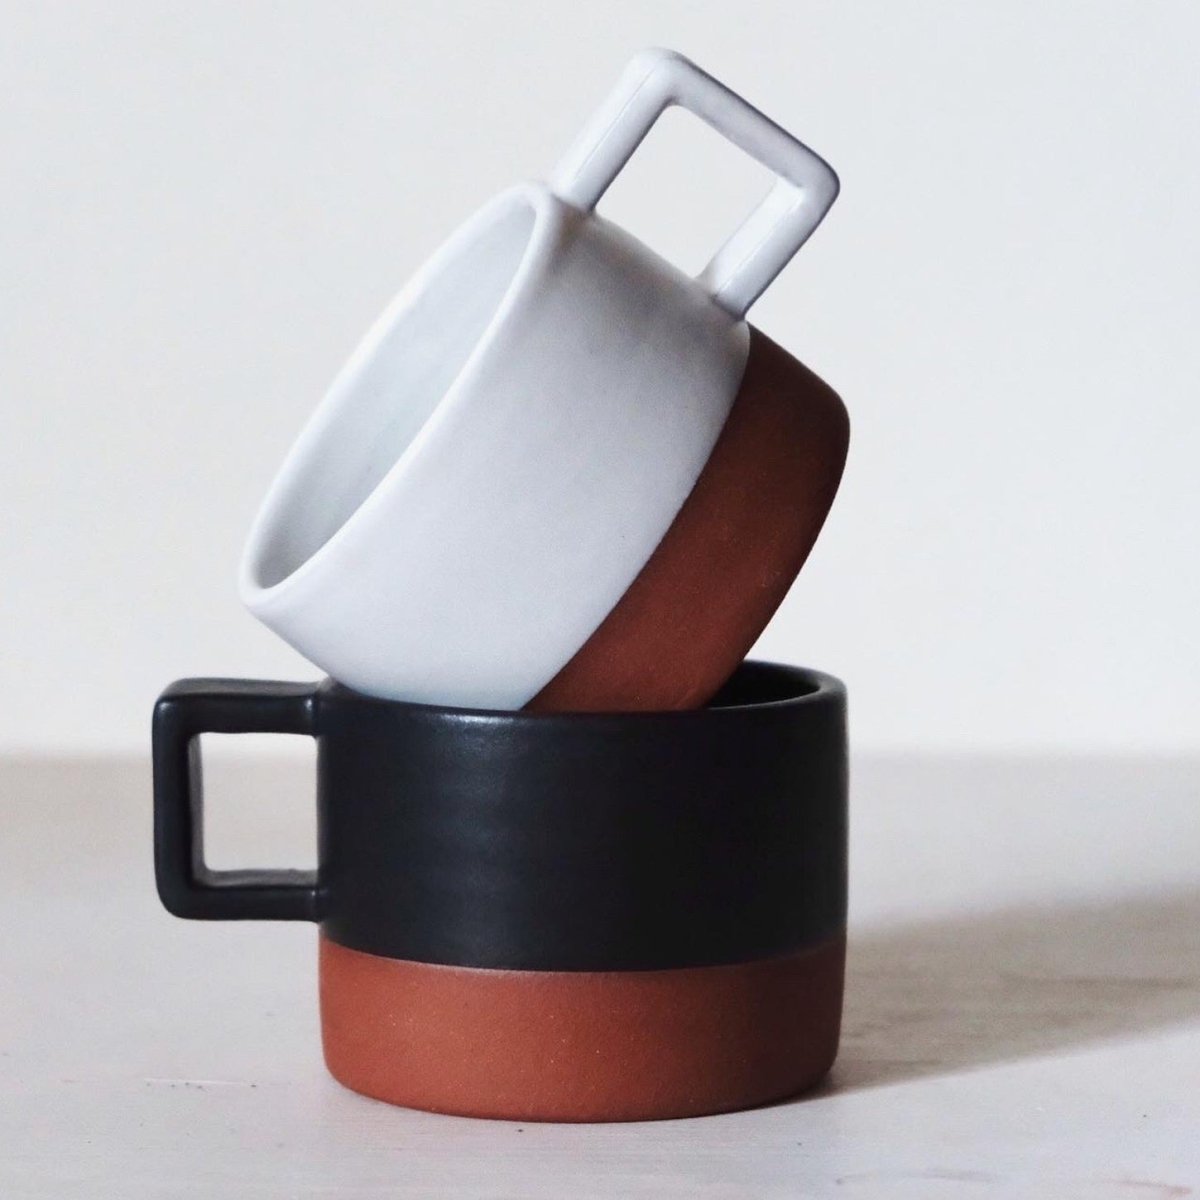 Small Black Mug/Espresso Cup